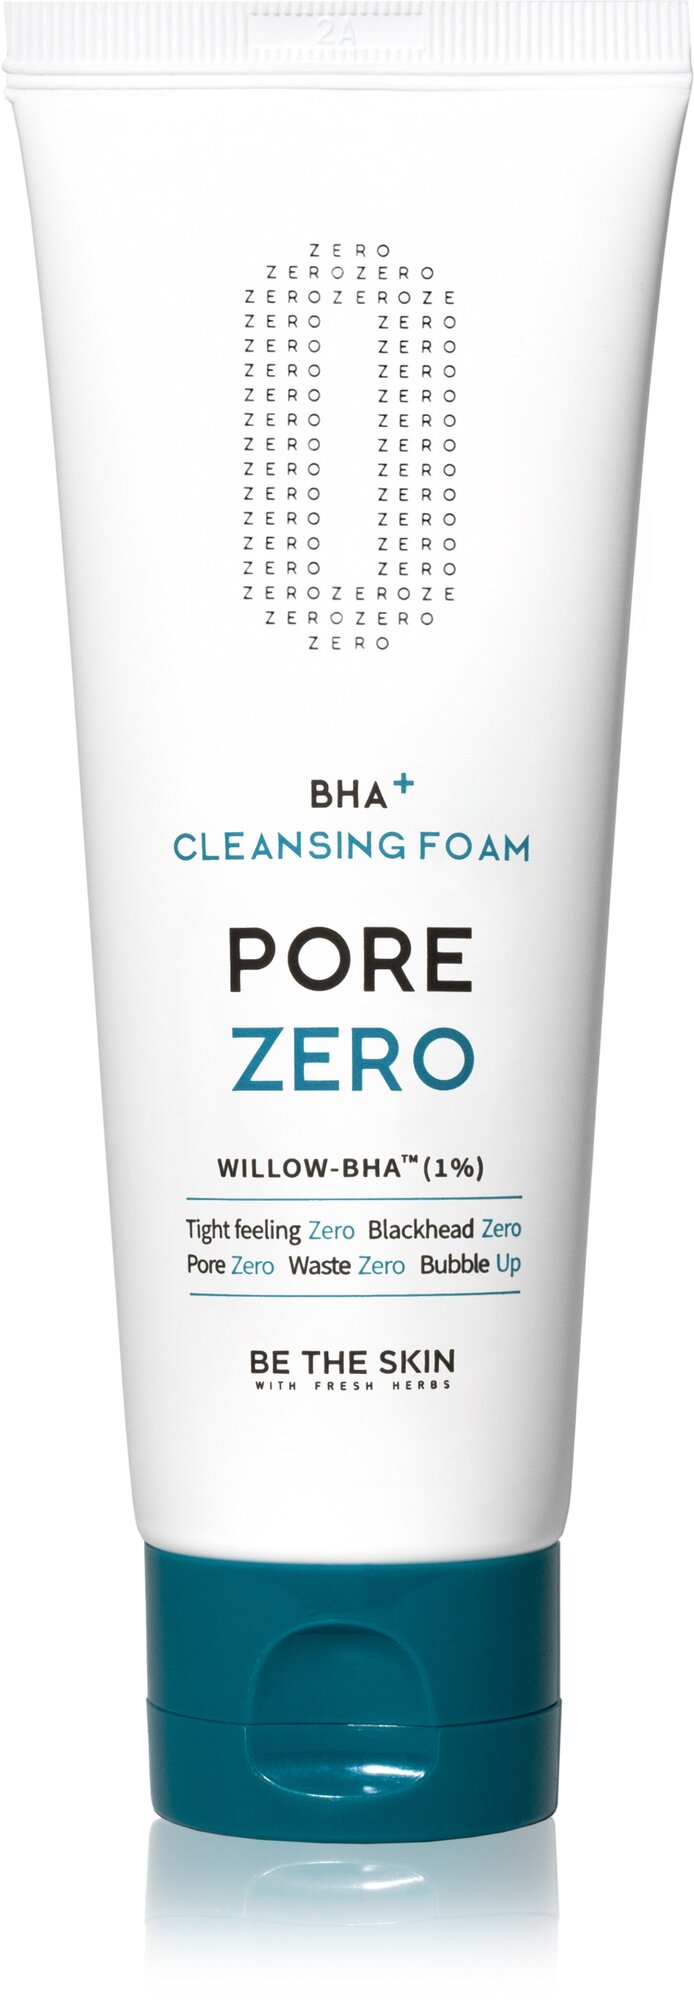 Очищающая пенка | Be The Skin BHA+ PORE ZERO Cleansing Foam 150g